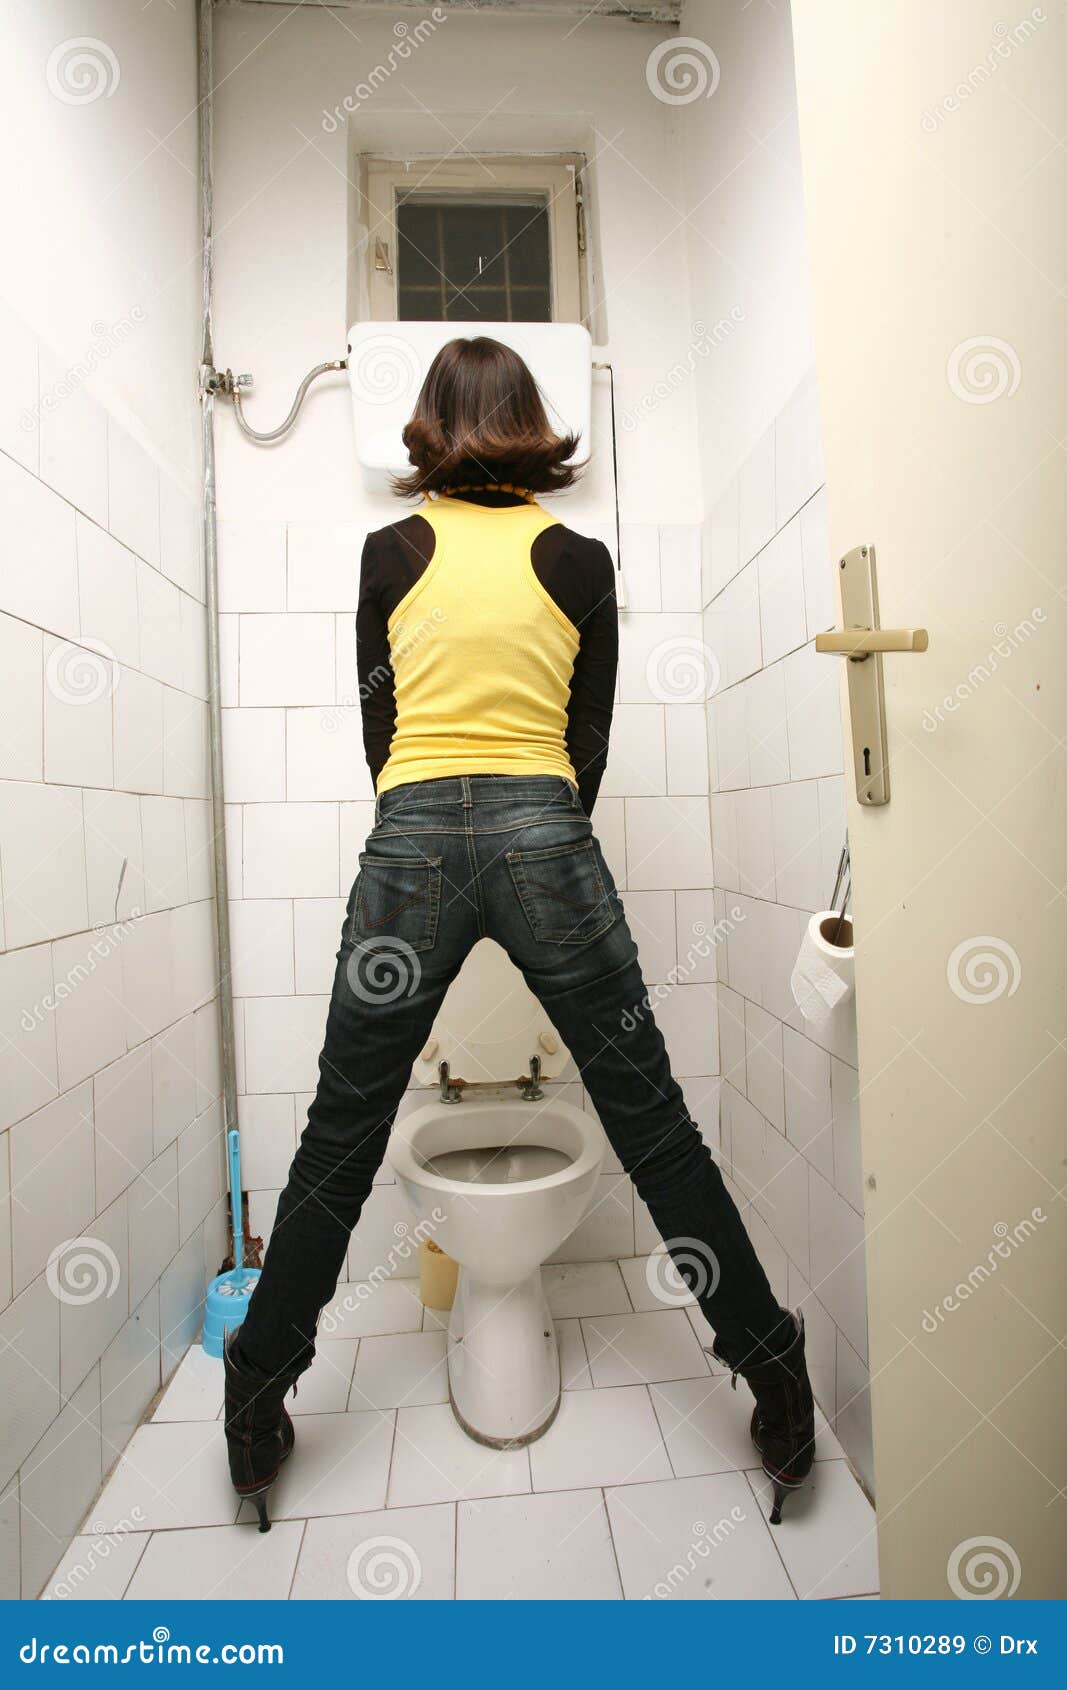 girls peeing in toilet